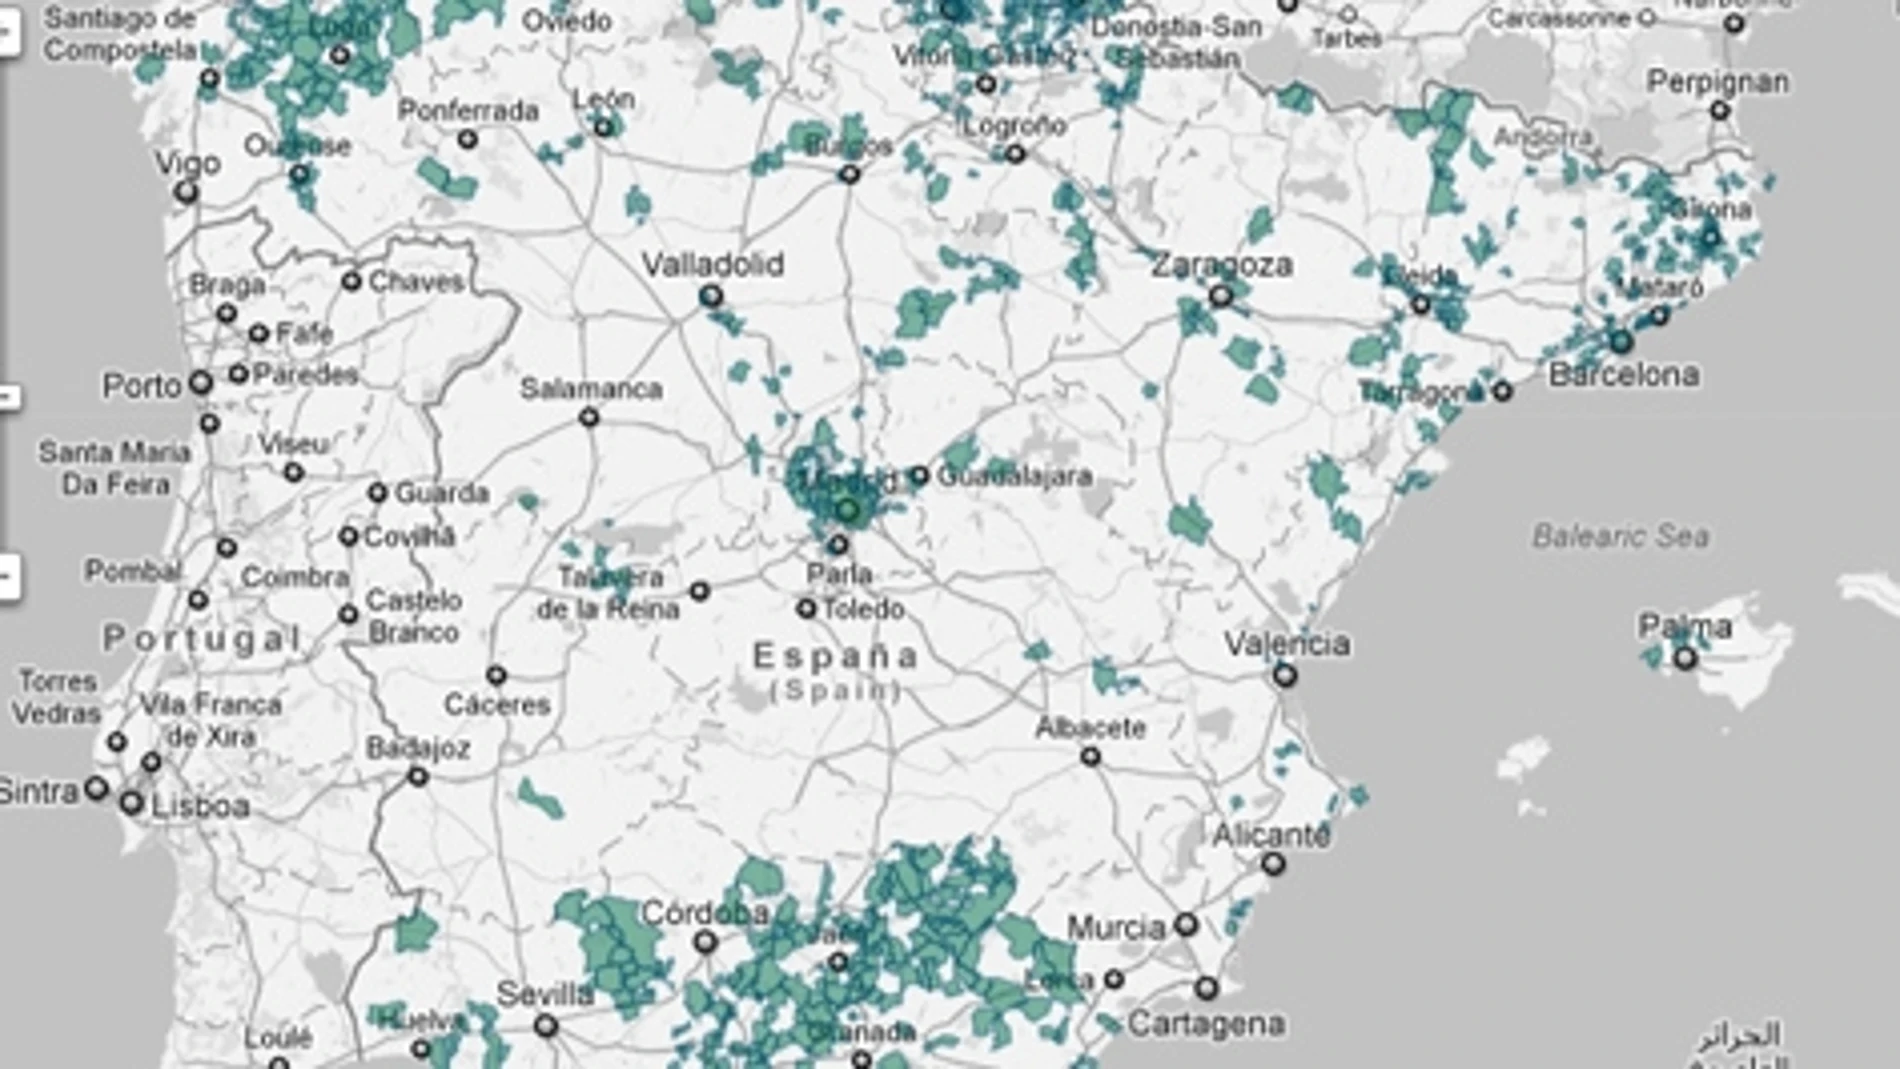 Mapa português da Europa datado de 1942 intriga internautas - Santo Tirso TV